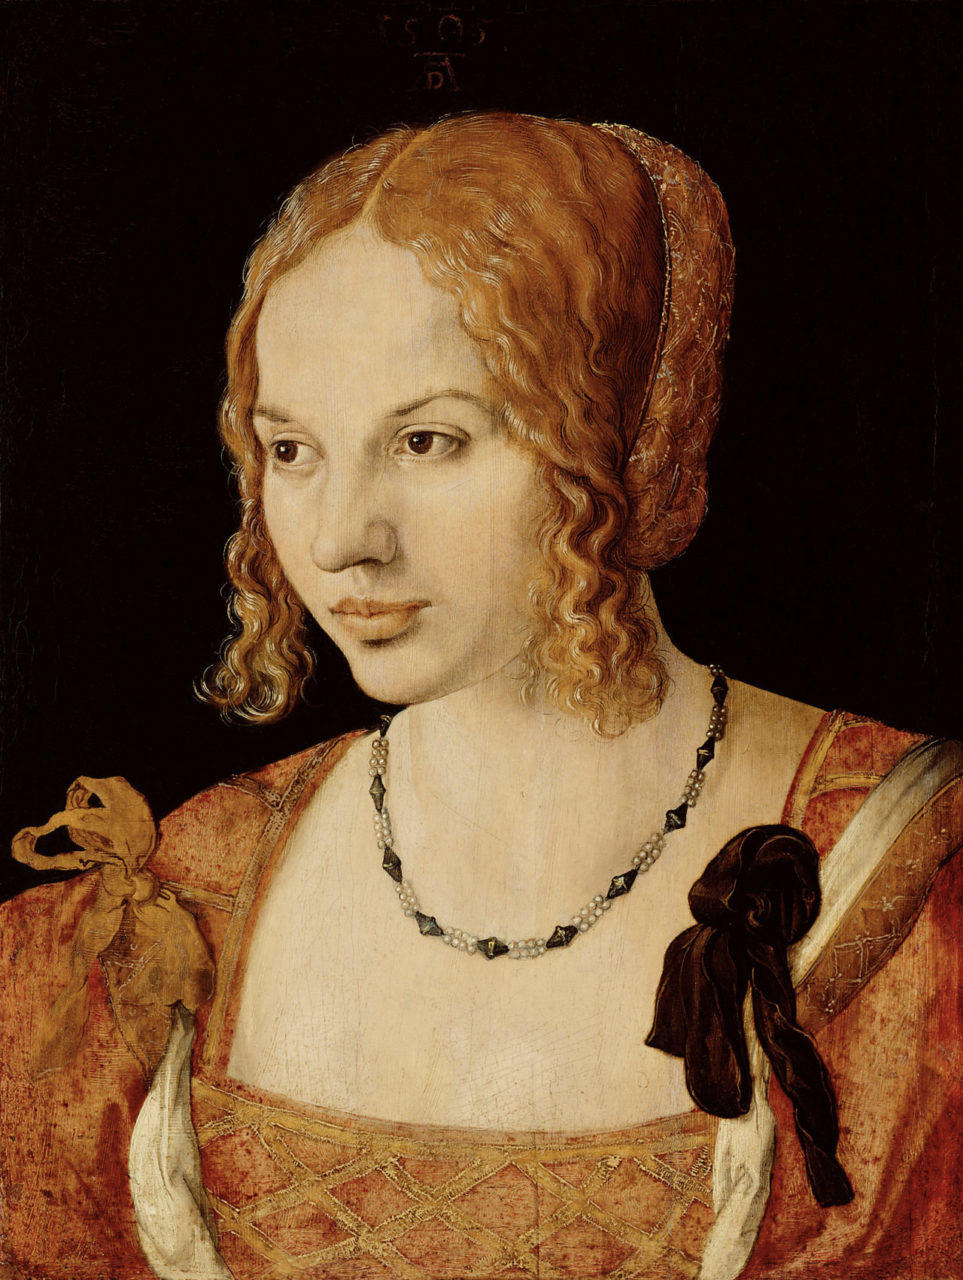 Half-length portrait of a young Venetian woman